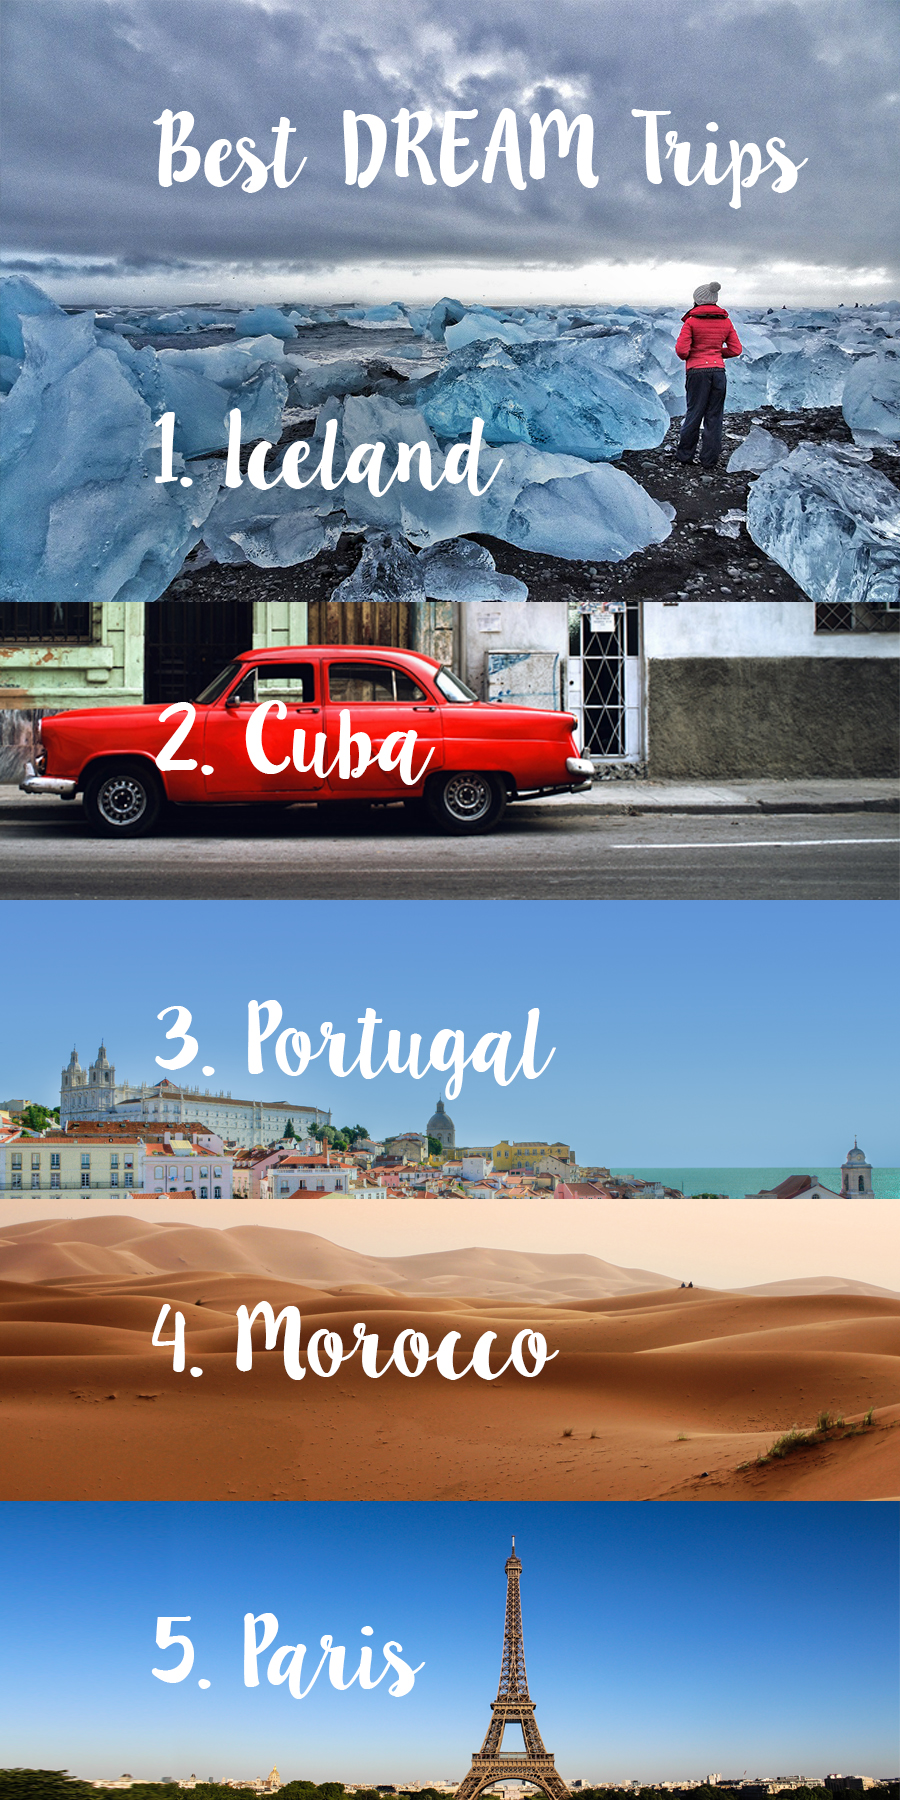 Best Dream Trips Iceland, Cuba, Portugal, Morocco, Paris